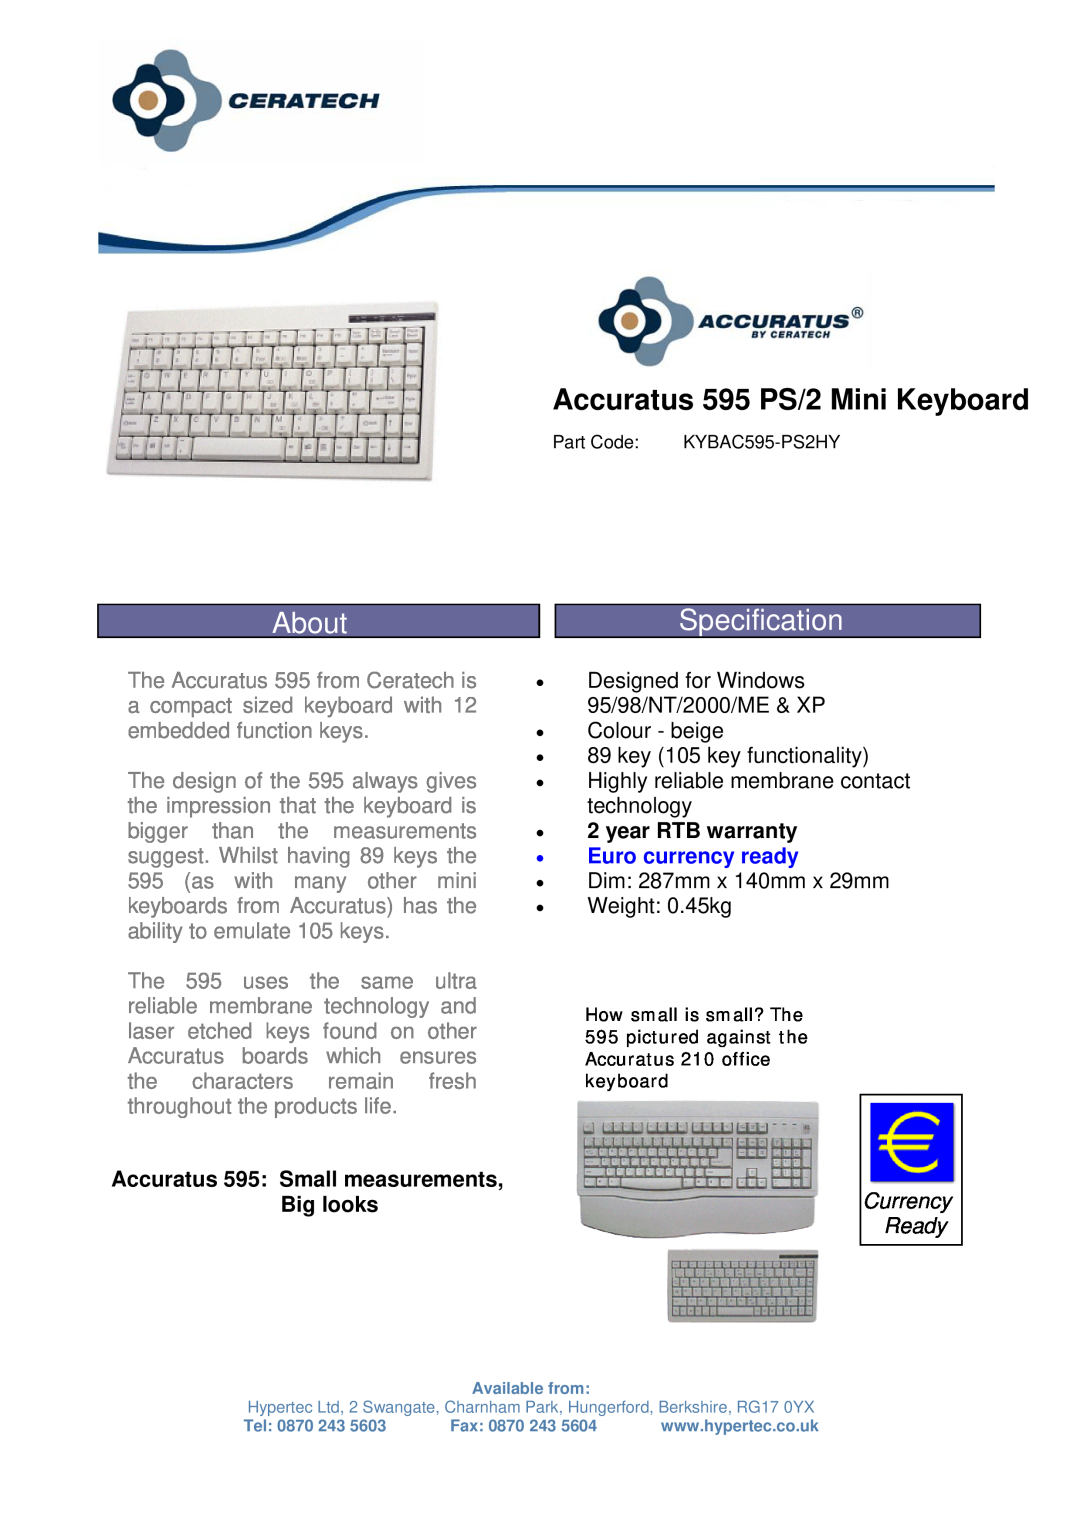 Hypertec warranty About, Accuratus 595 PS/2 Mini Keyboard, Specification, Accuratus 595 Small measurements, Big looks 